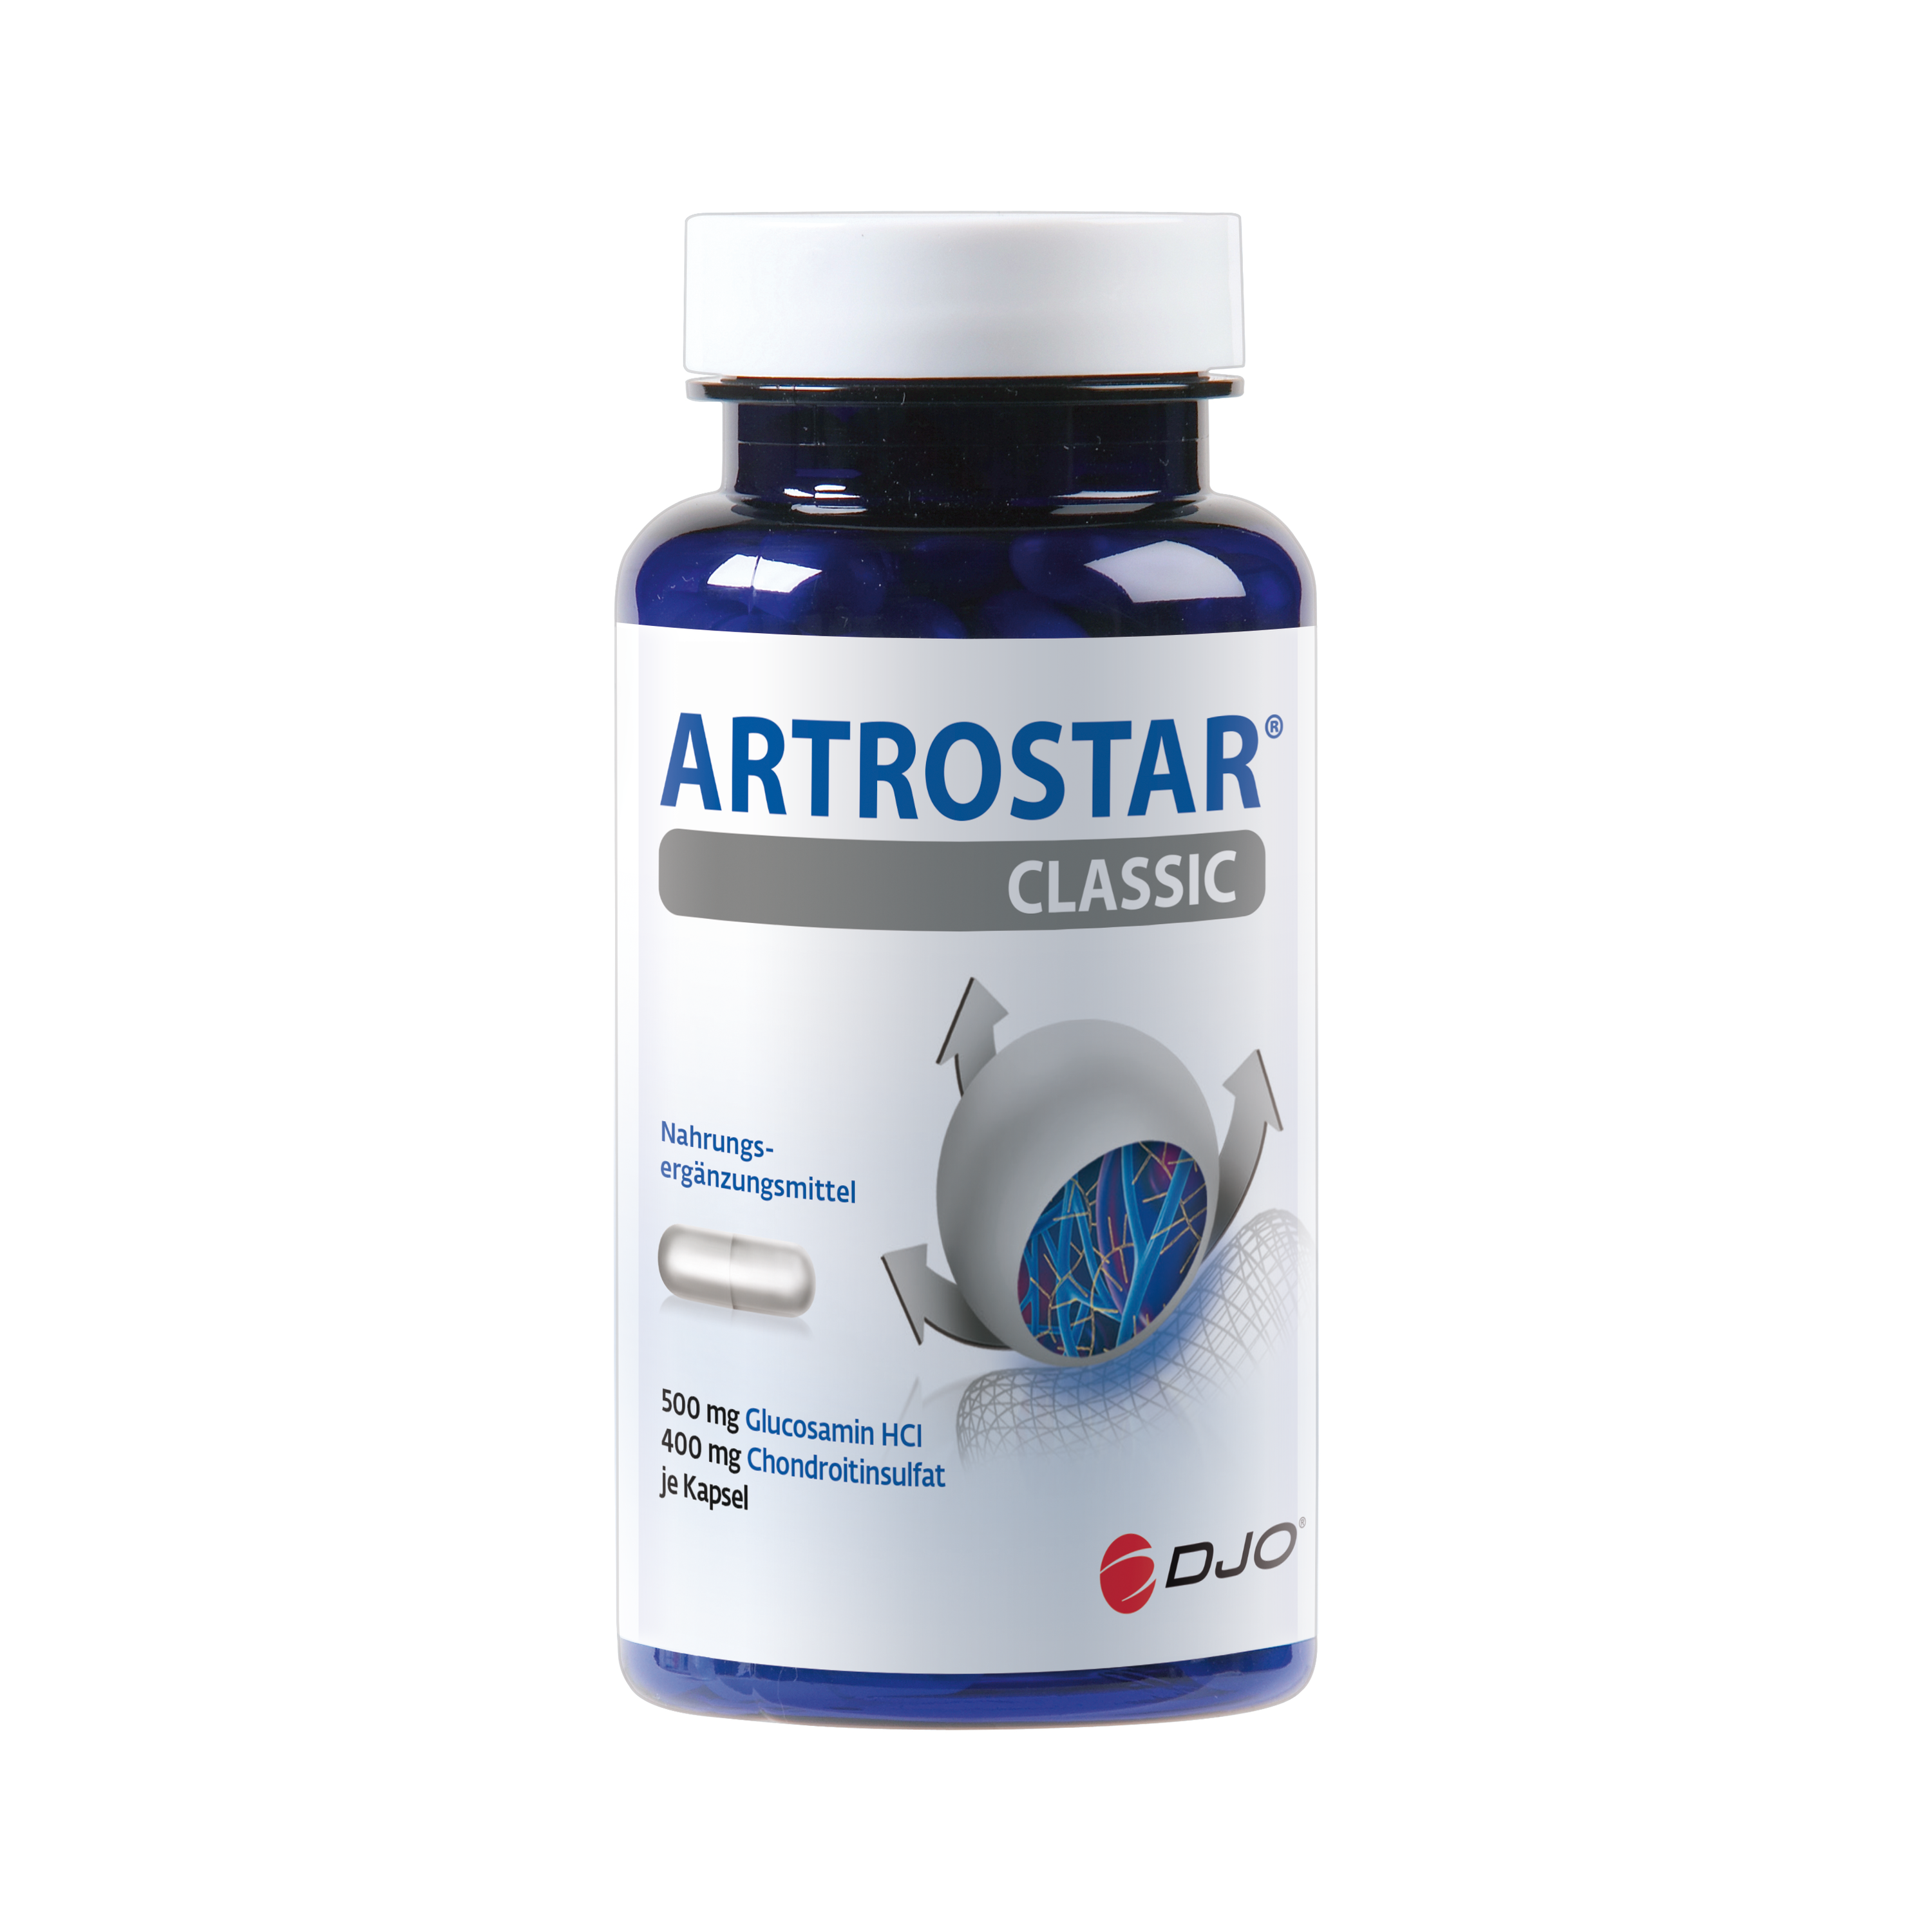 Produktbild ARTROSTAR® Classic, Nahrungsergänzungsmittel mit Glucosamin und Chondroitin